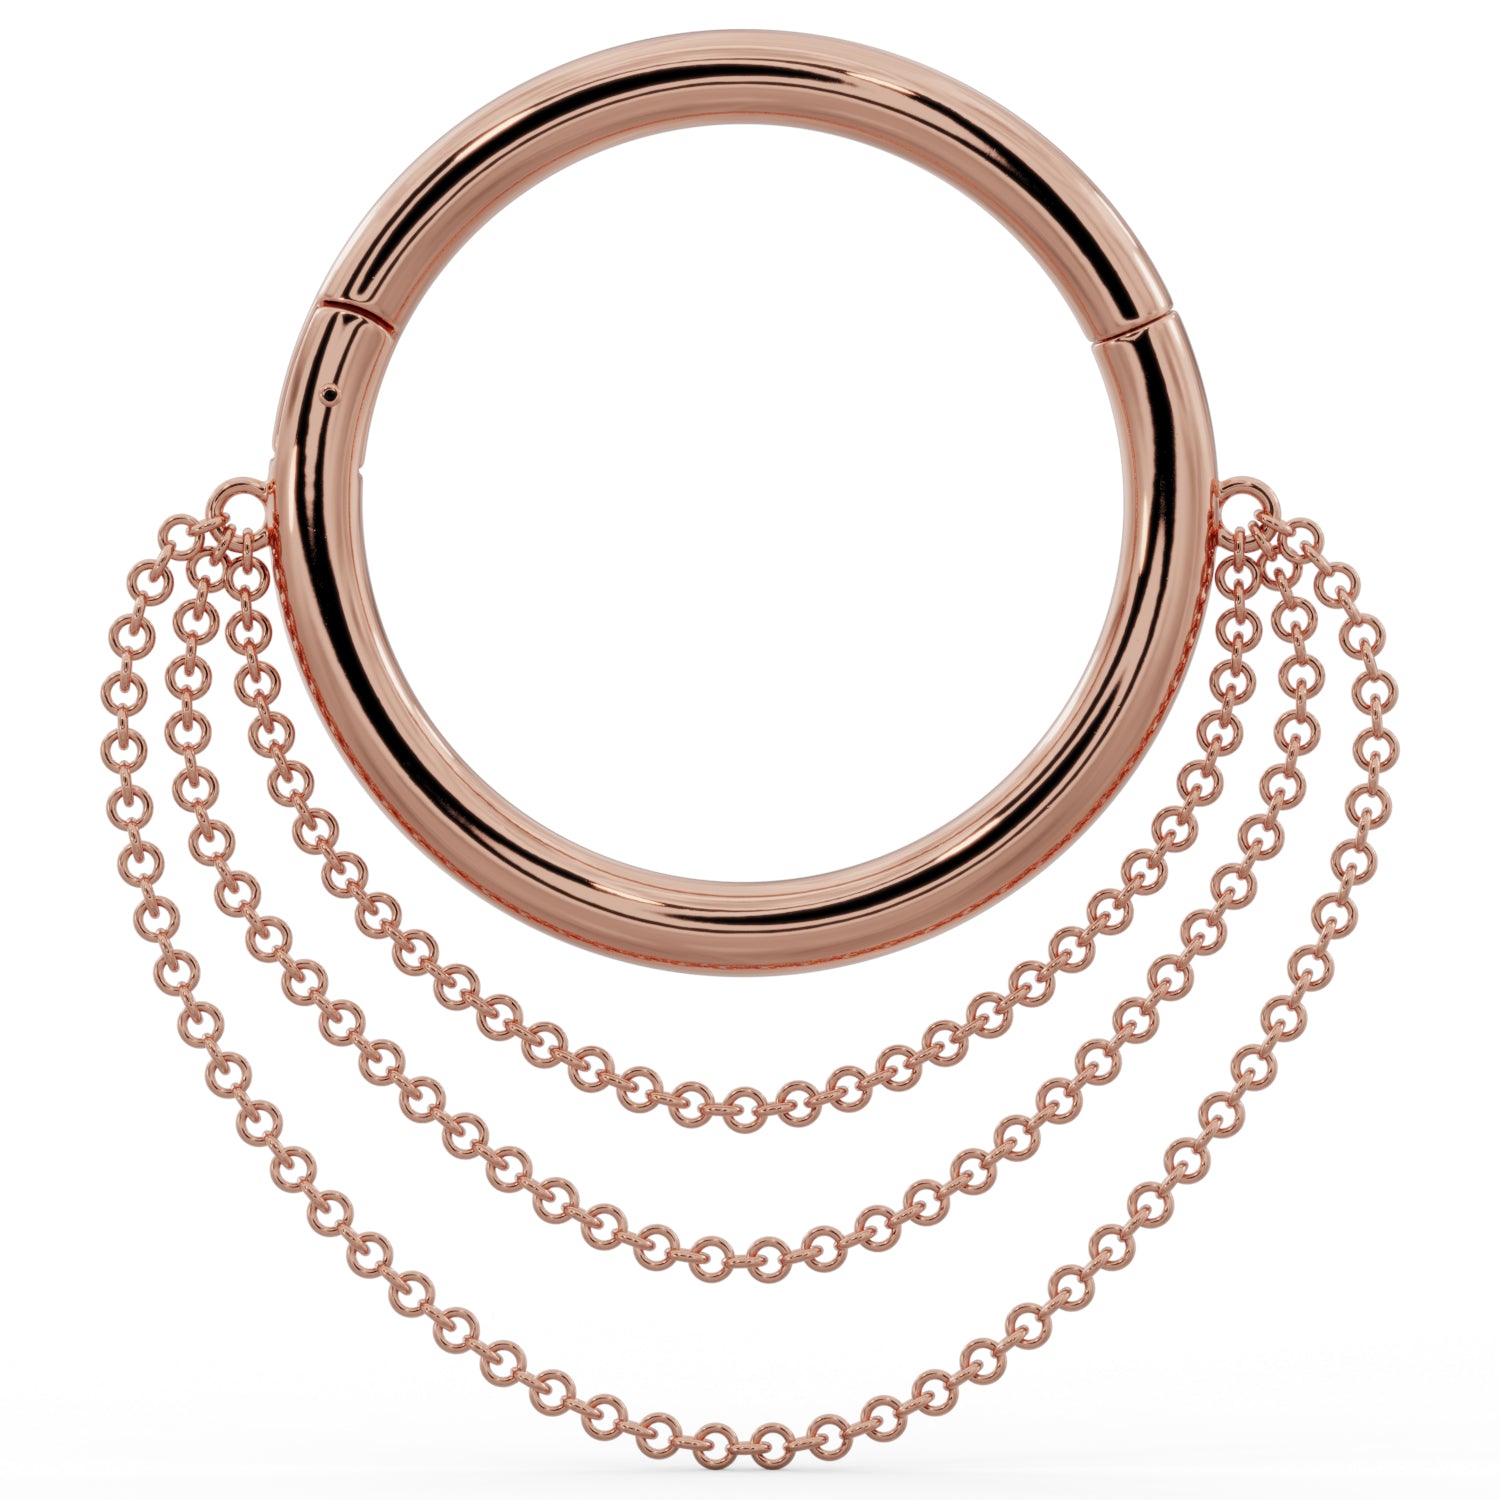 Cascading Chains 14k Gold Hoop Clicker Ring-14K Rose Gold   16G (1.2mm)   1 2